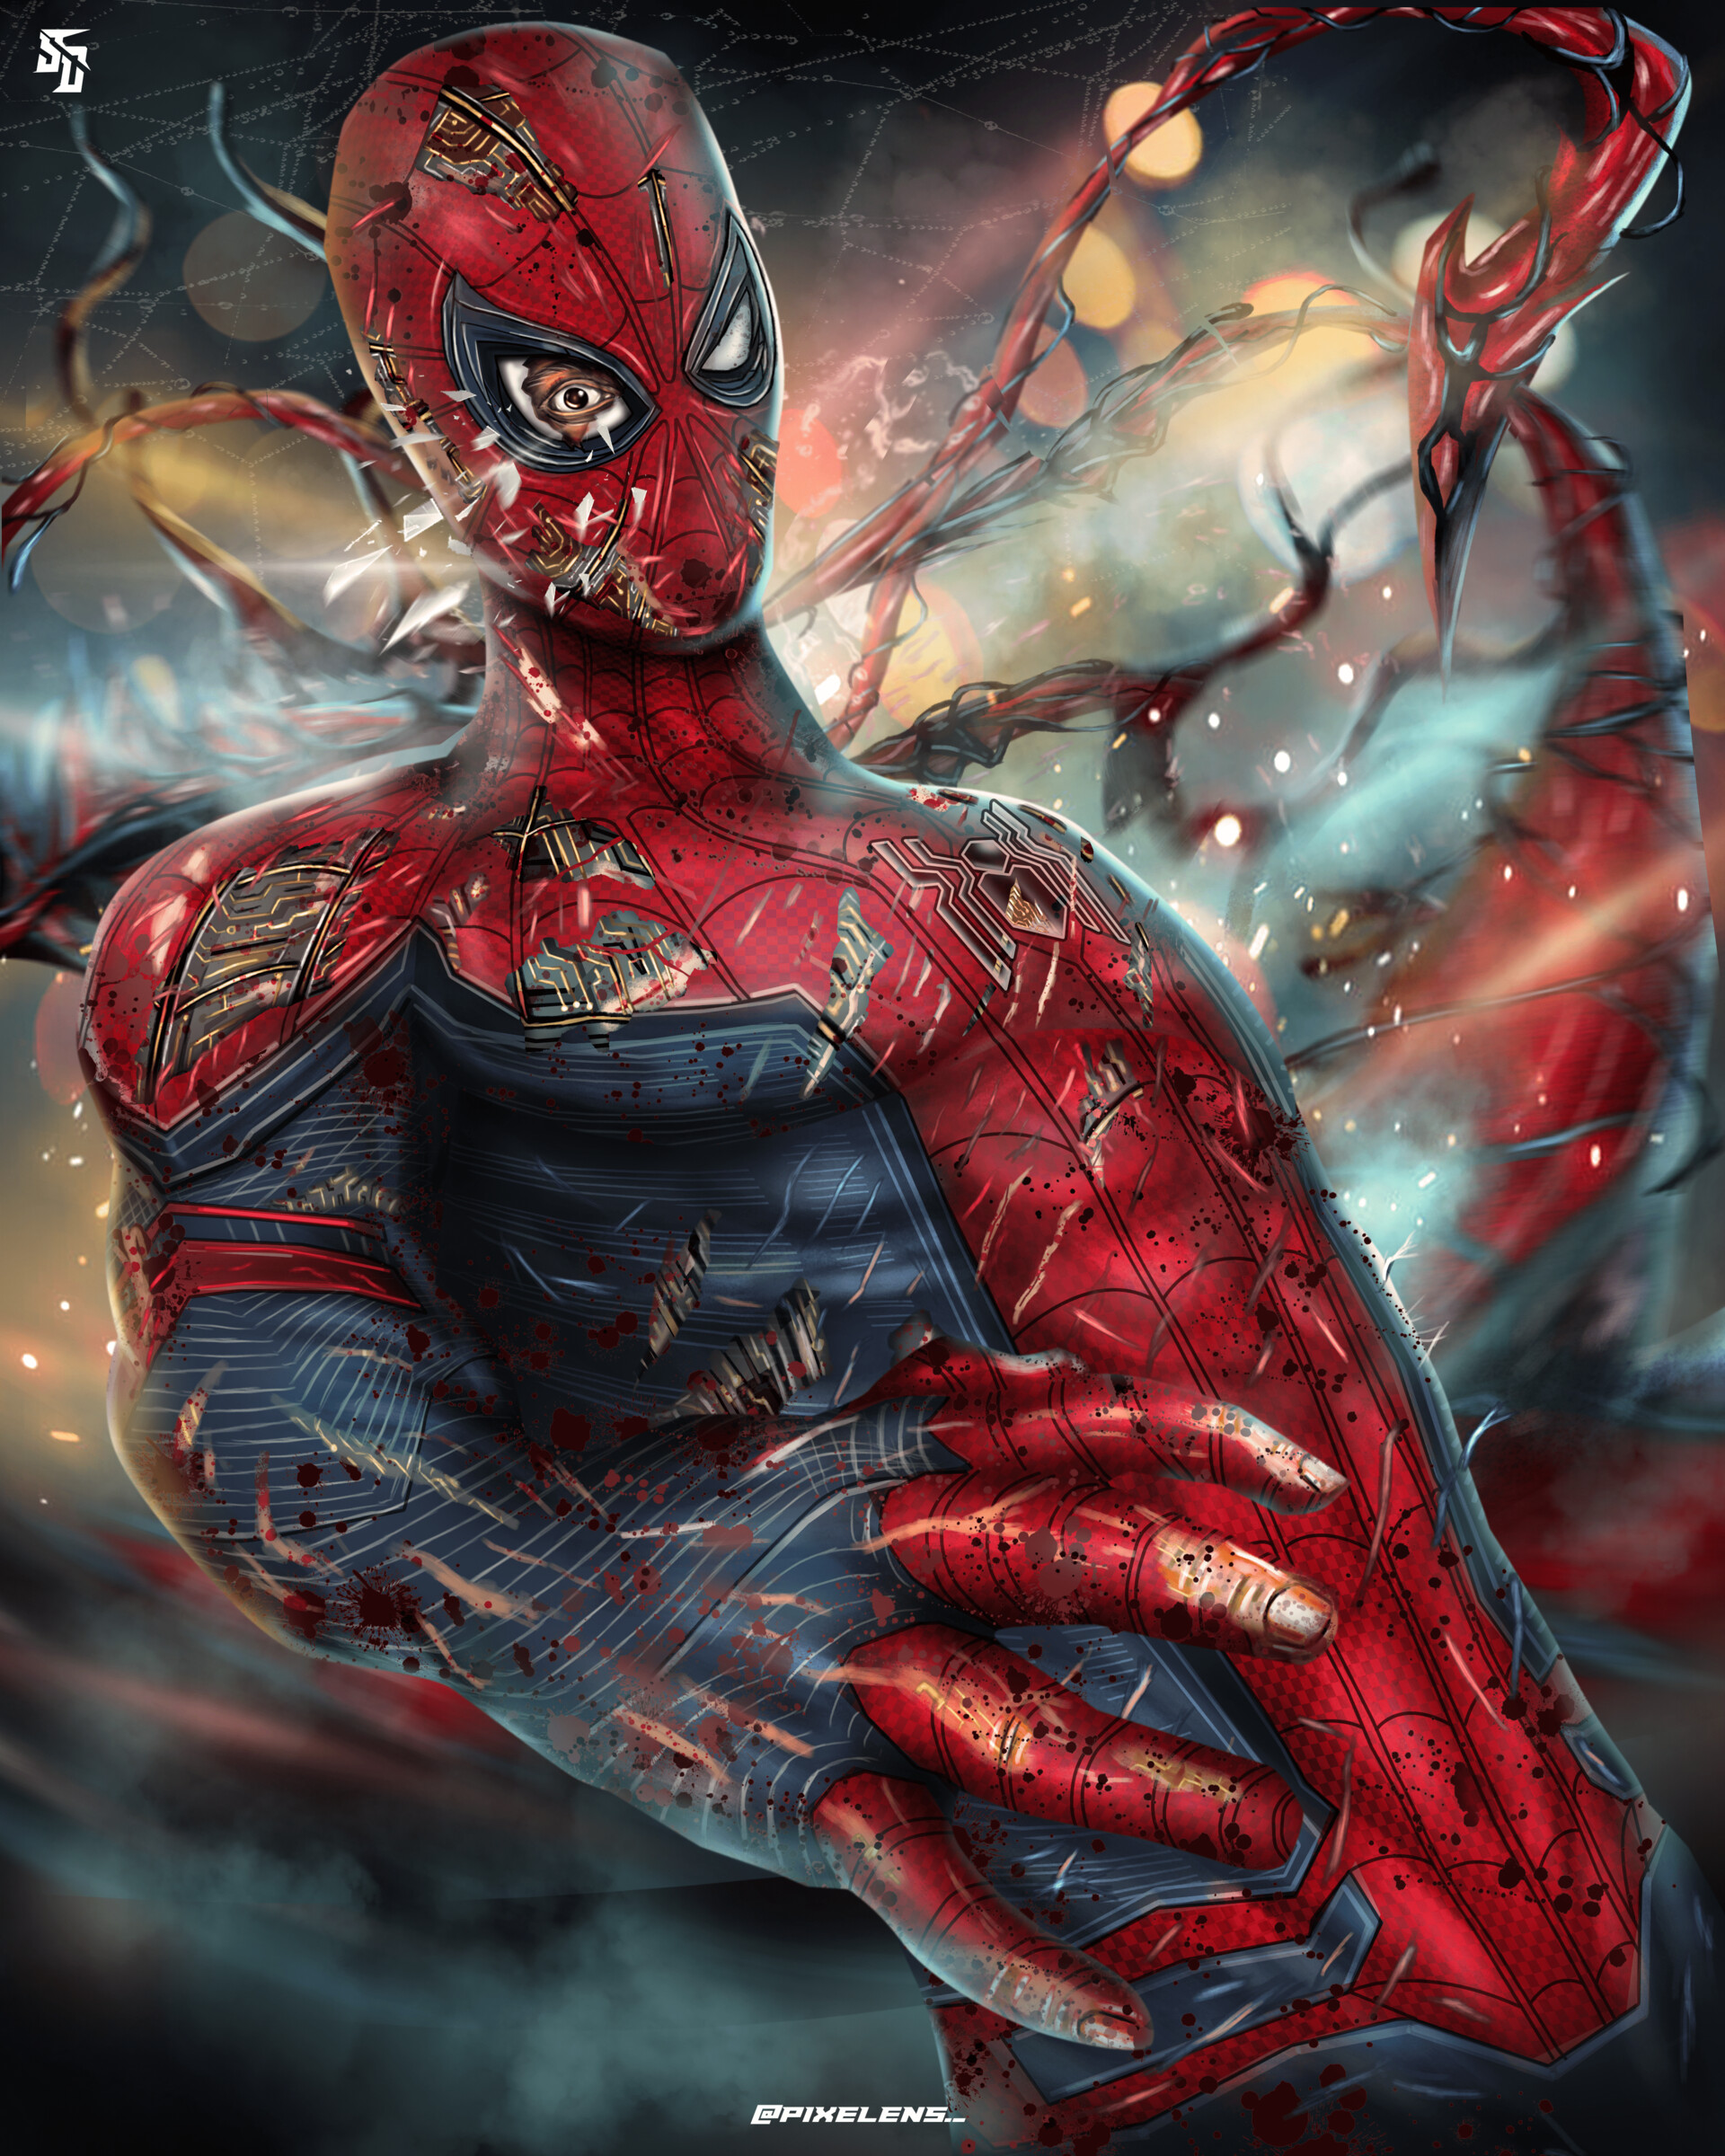 ArtStation - Spiderman Battle Damaged Suit